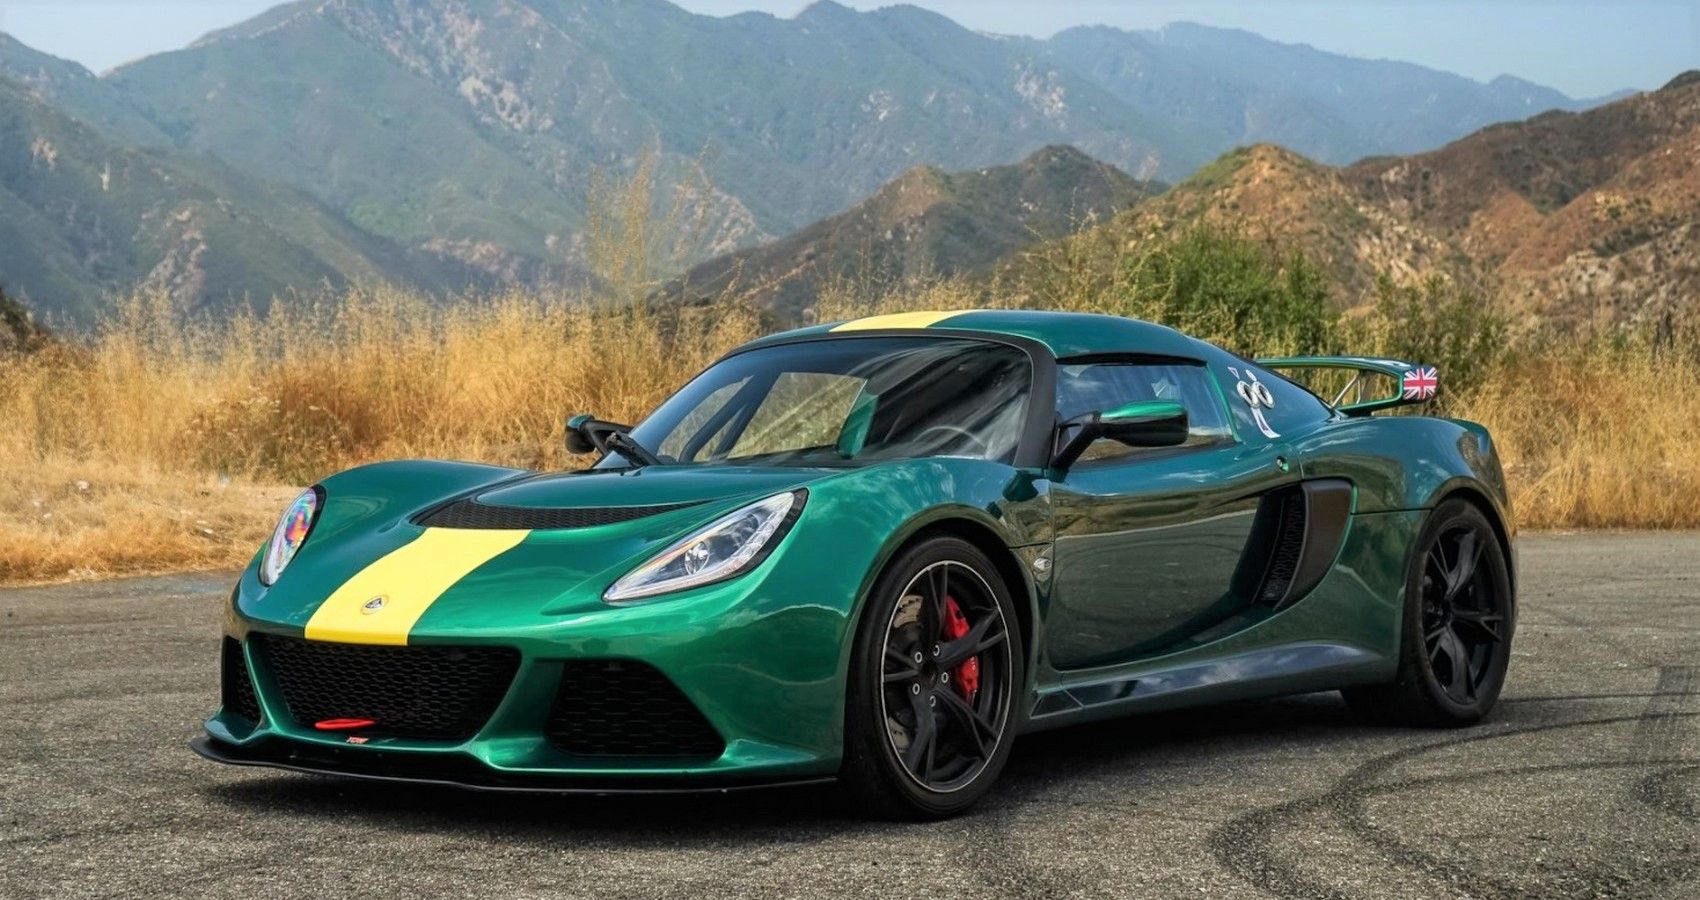 Who Makes Lotus Cars?